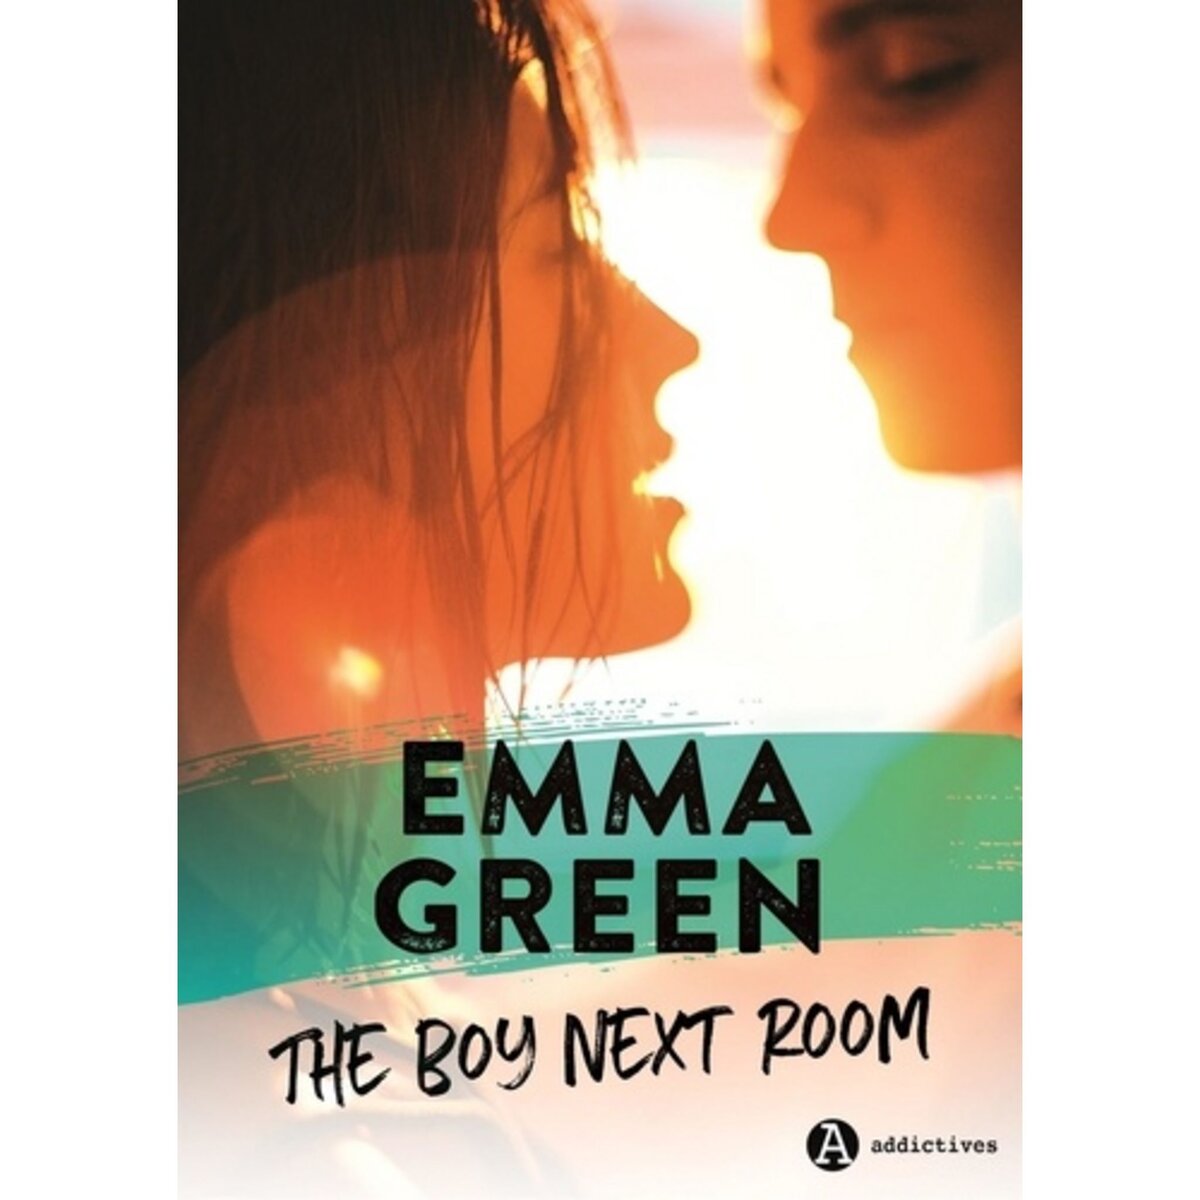  THE BOY NEXT ROOM, Green Emma